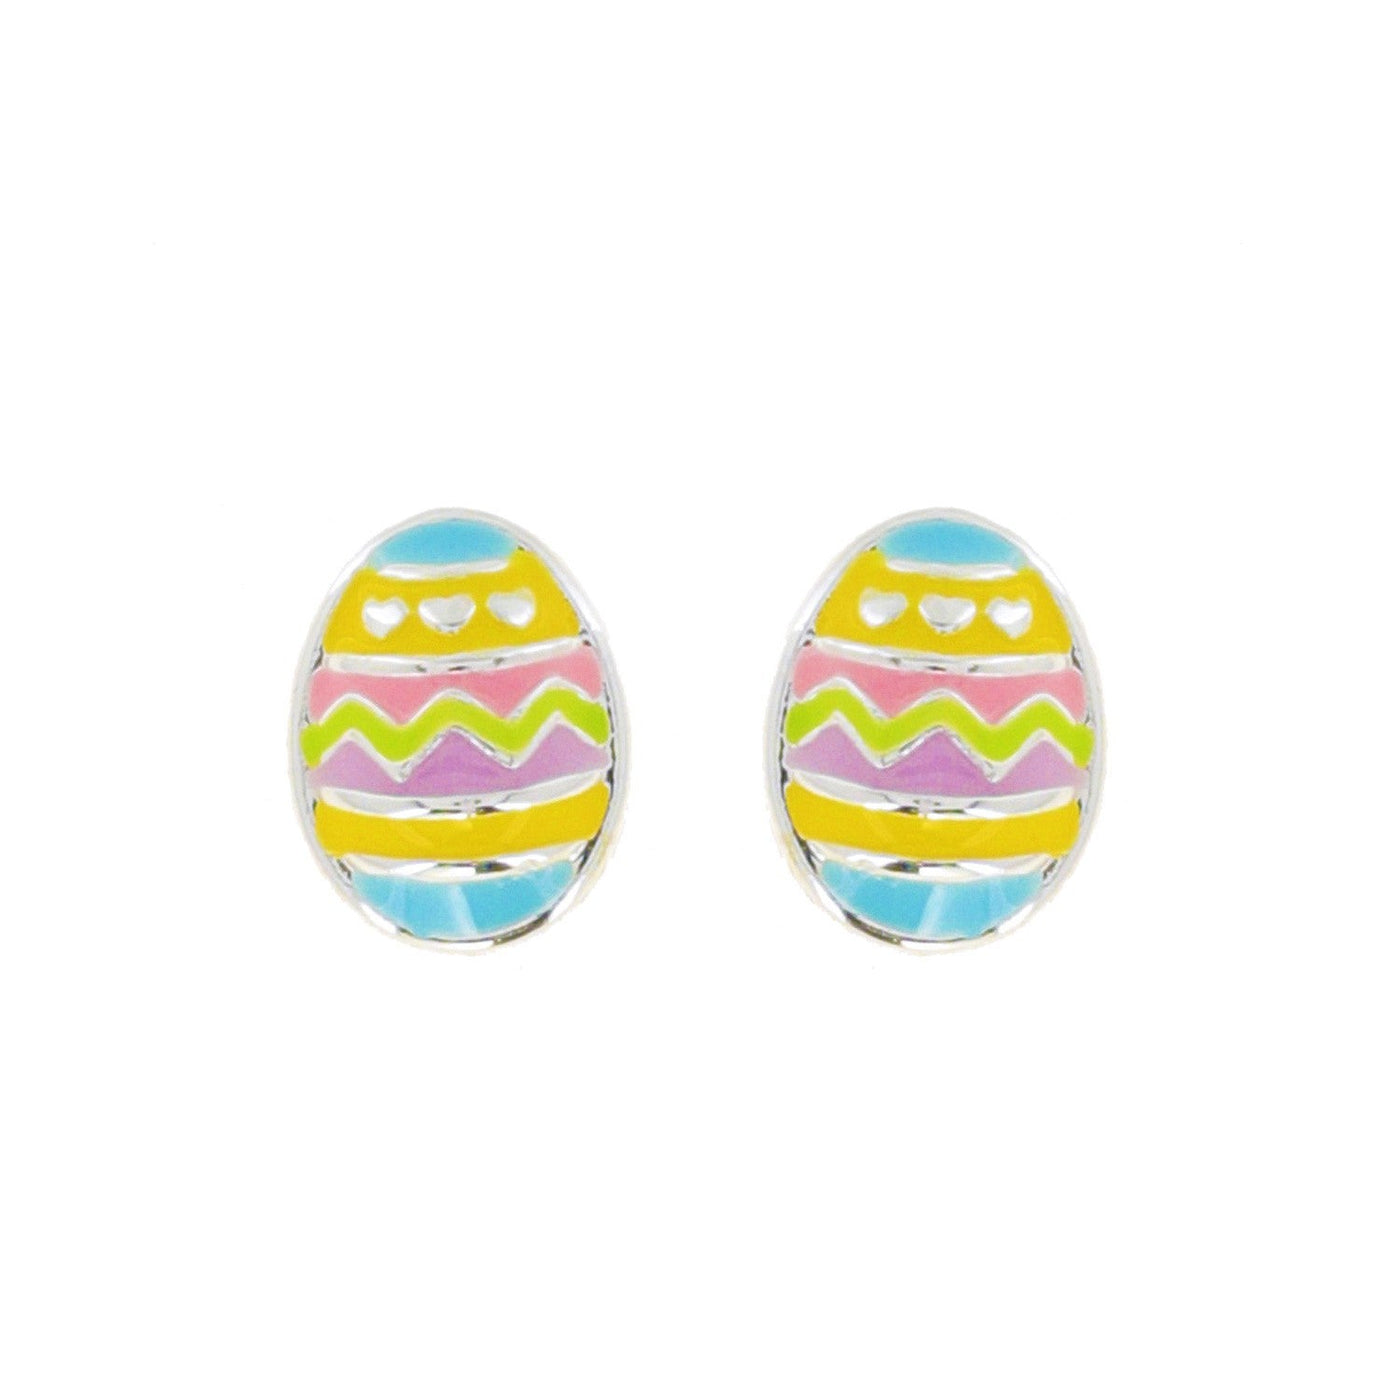 Easter Egg Multicolor Enamel Coated Stud Earrings